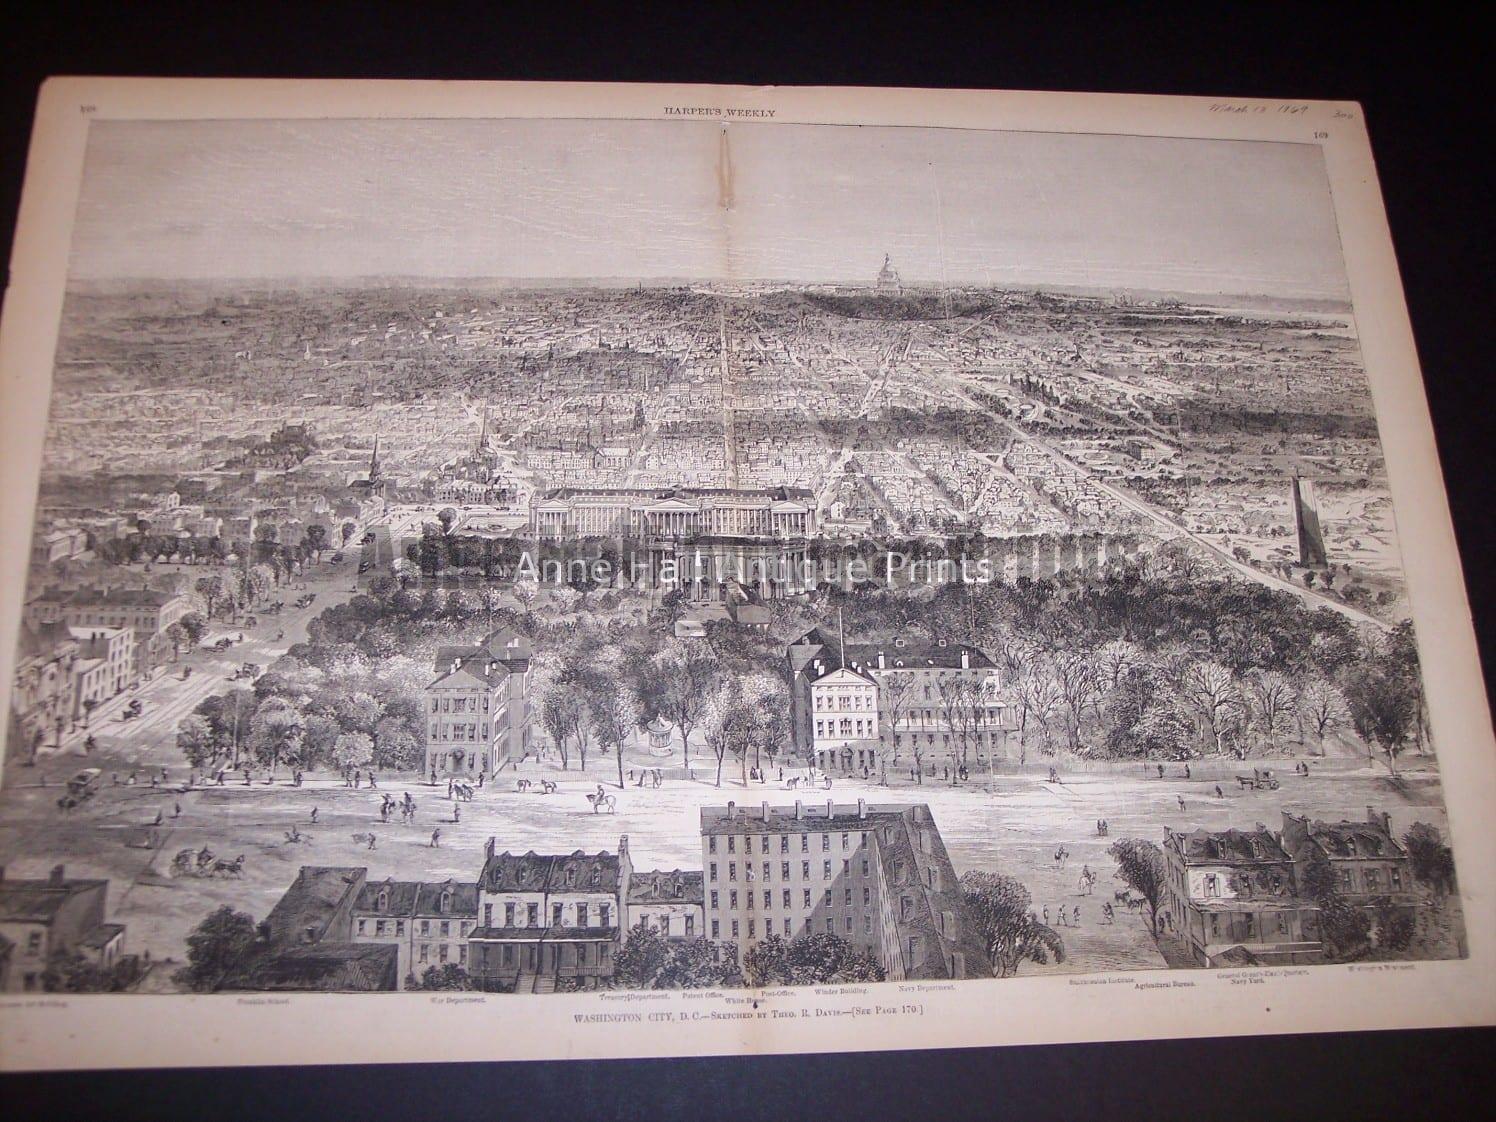 9679 Birdseye View of Washington City, DC from 1869 $300.